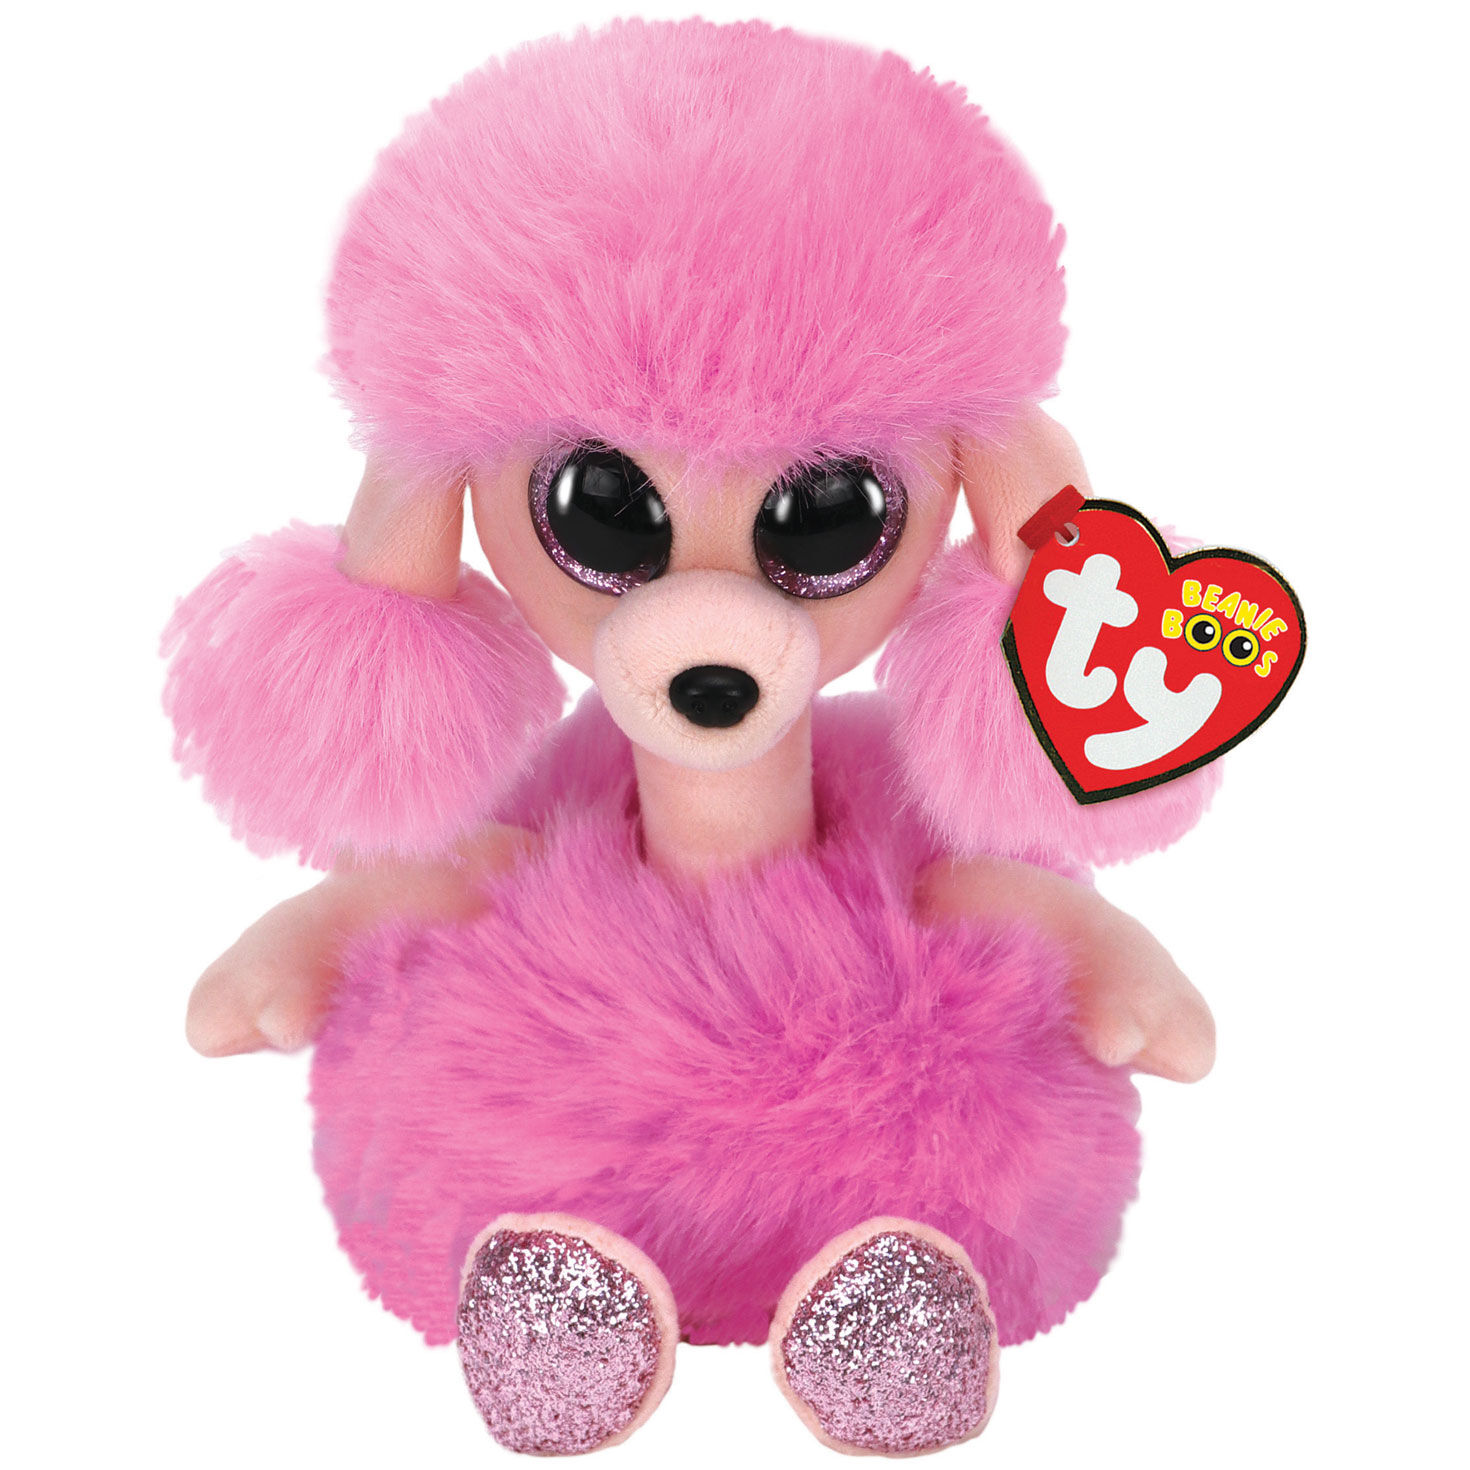 pink poodle stuffed animal